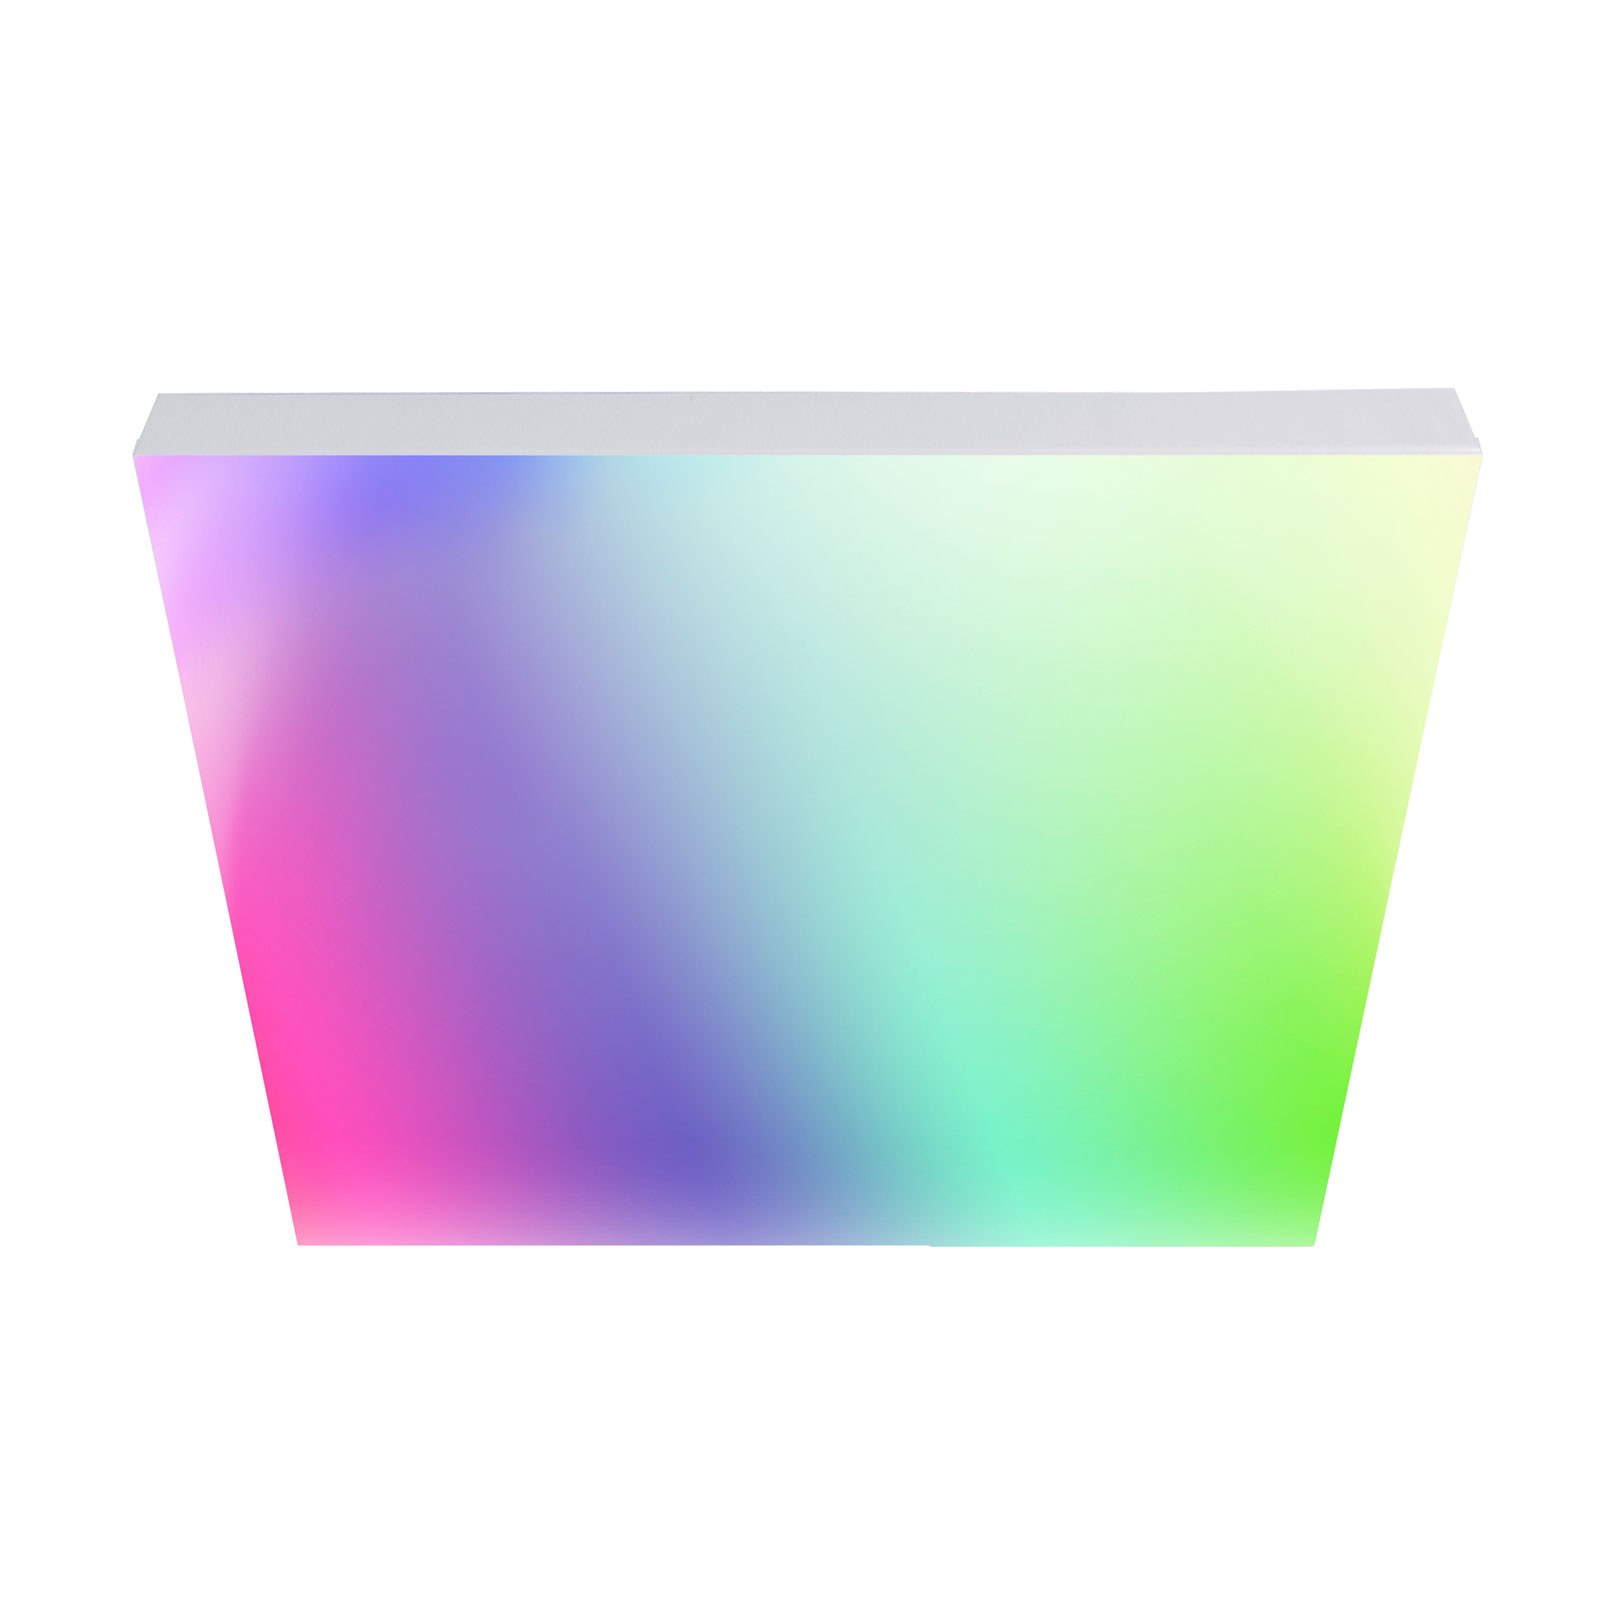 Müller Licht tint LED-Panel Aris 30 x 30 cm, weiß